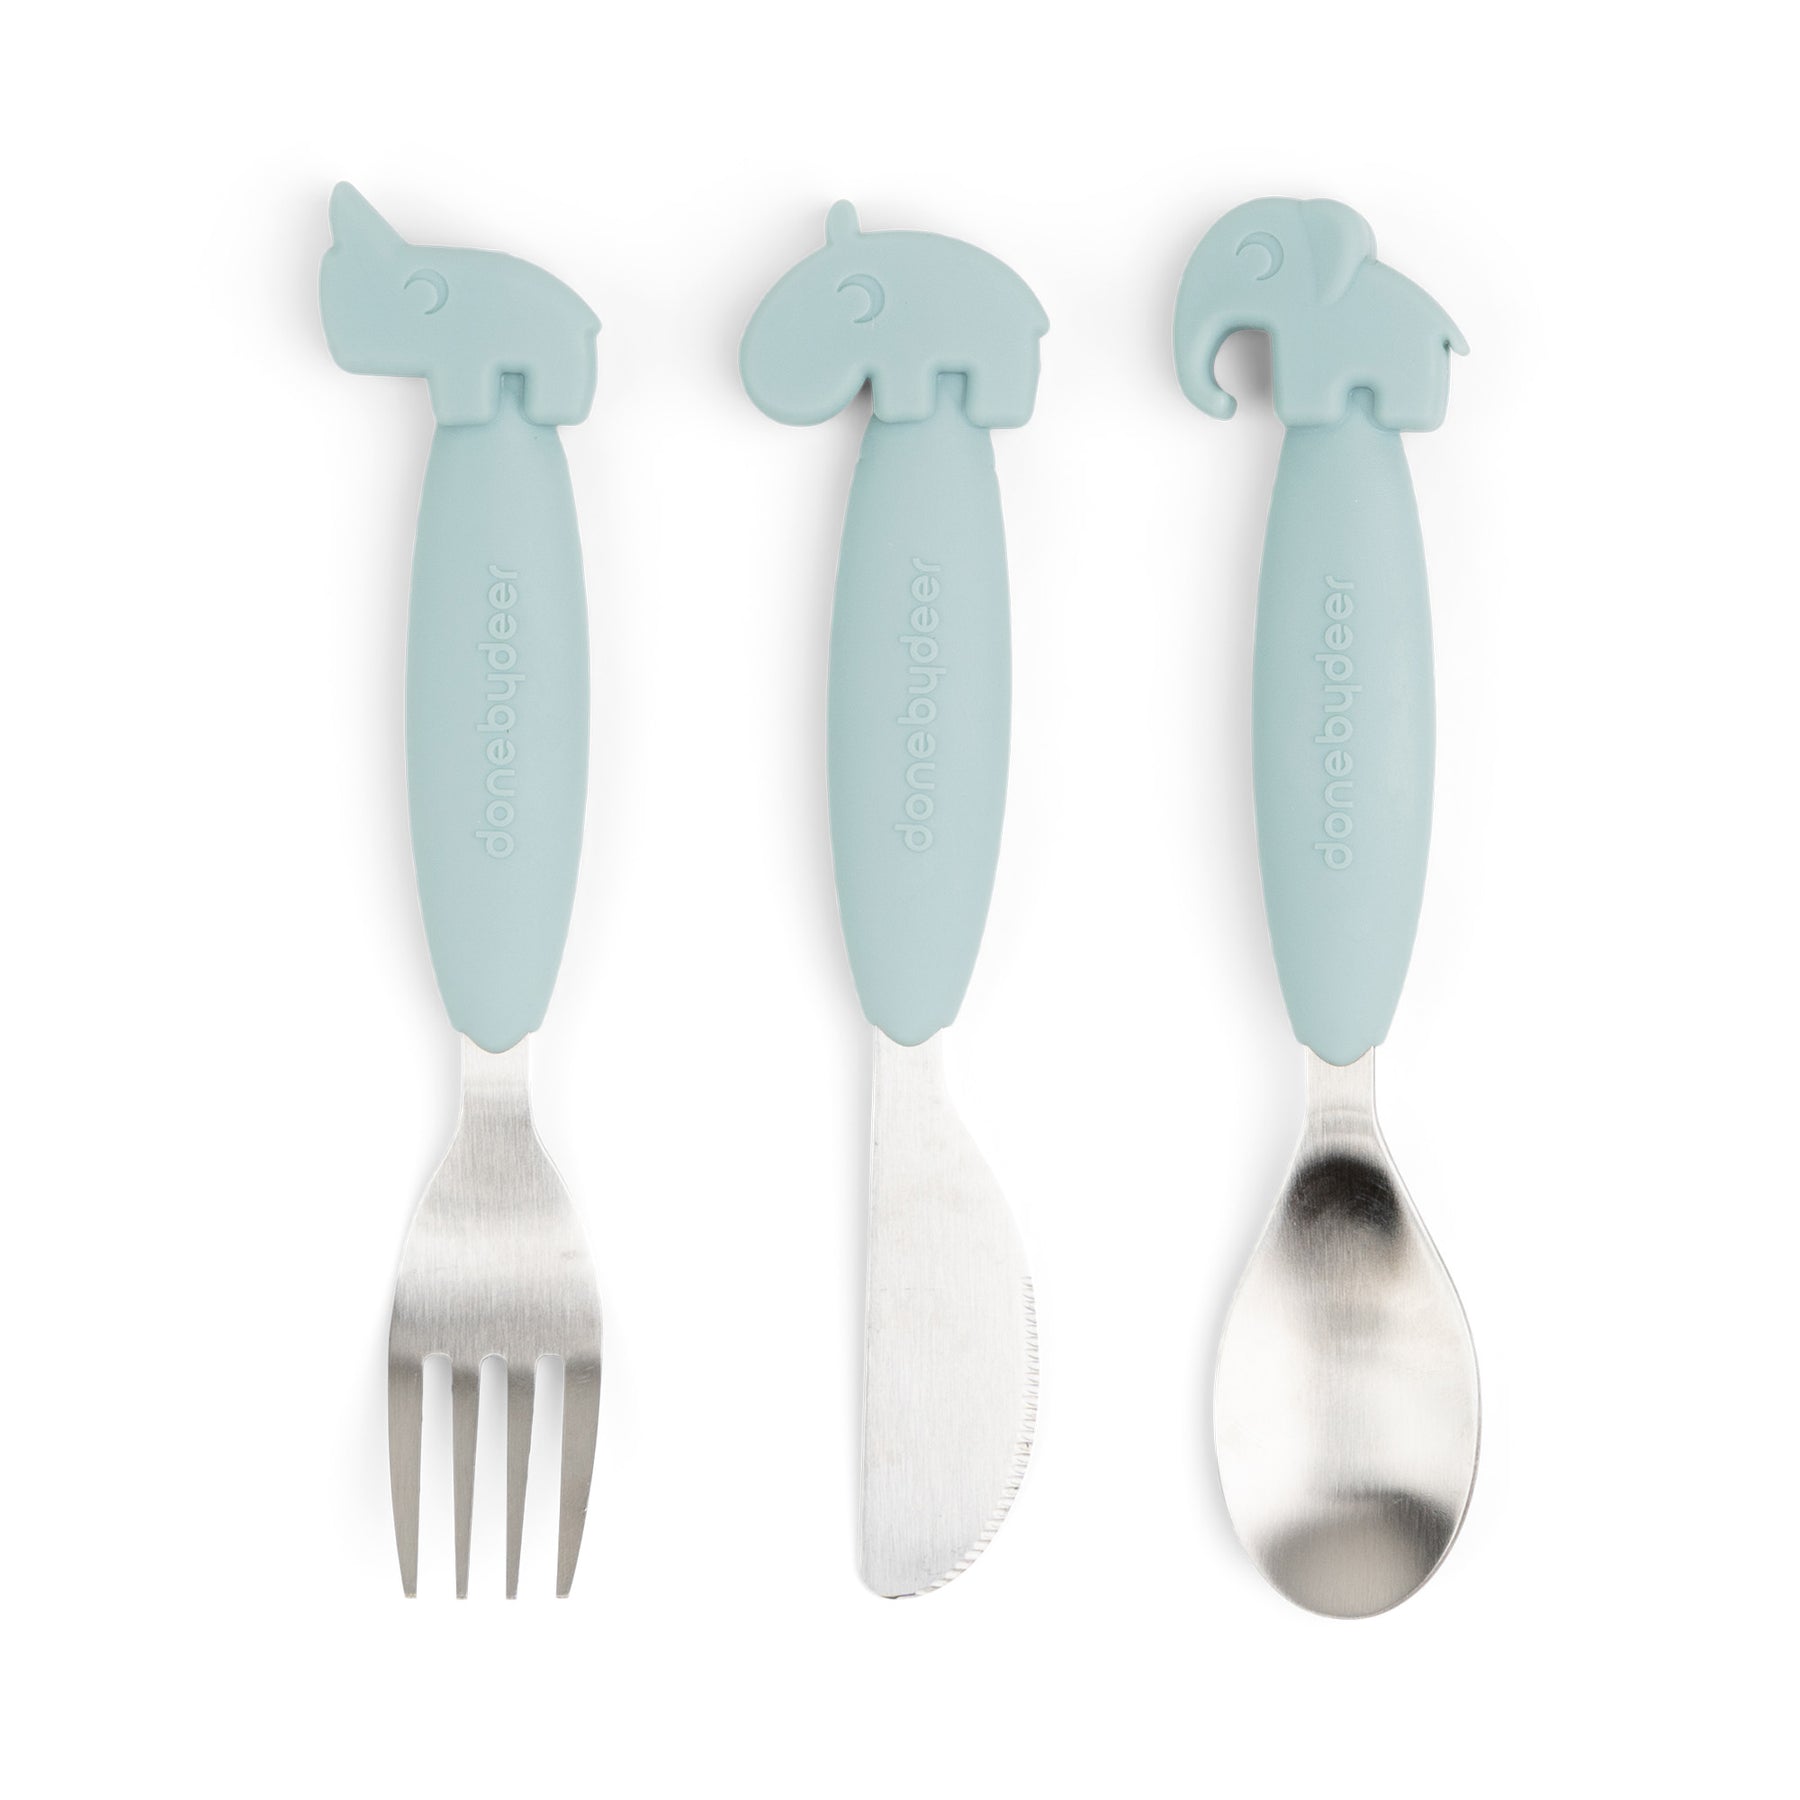 Easy-grip cutlery set - Deer friends - Blue - Front